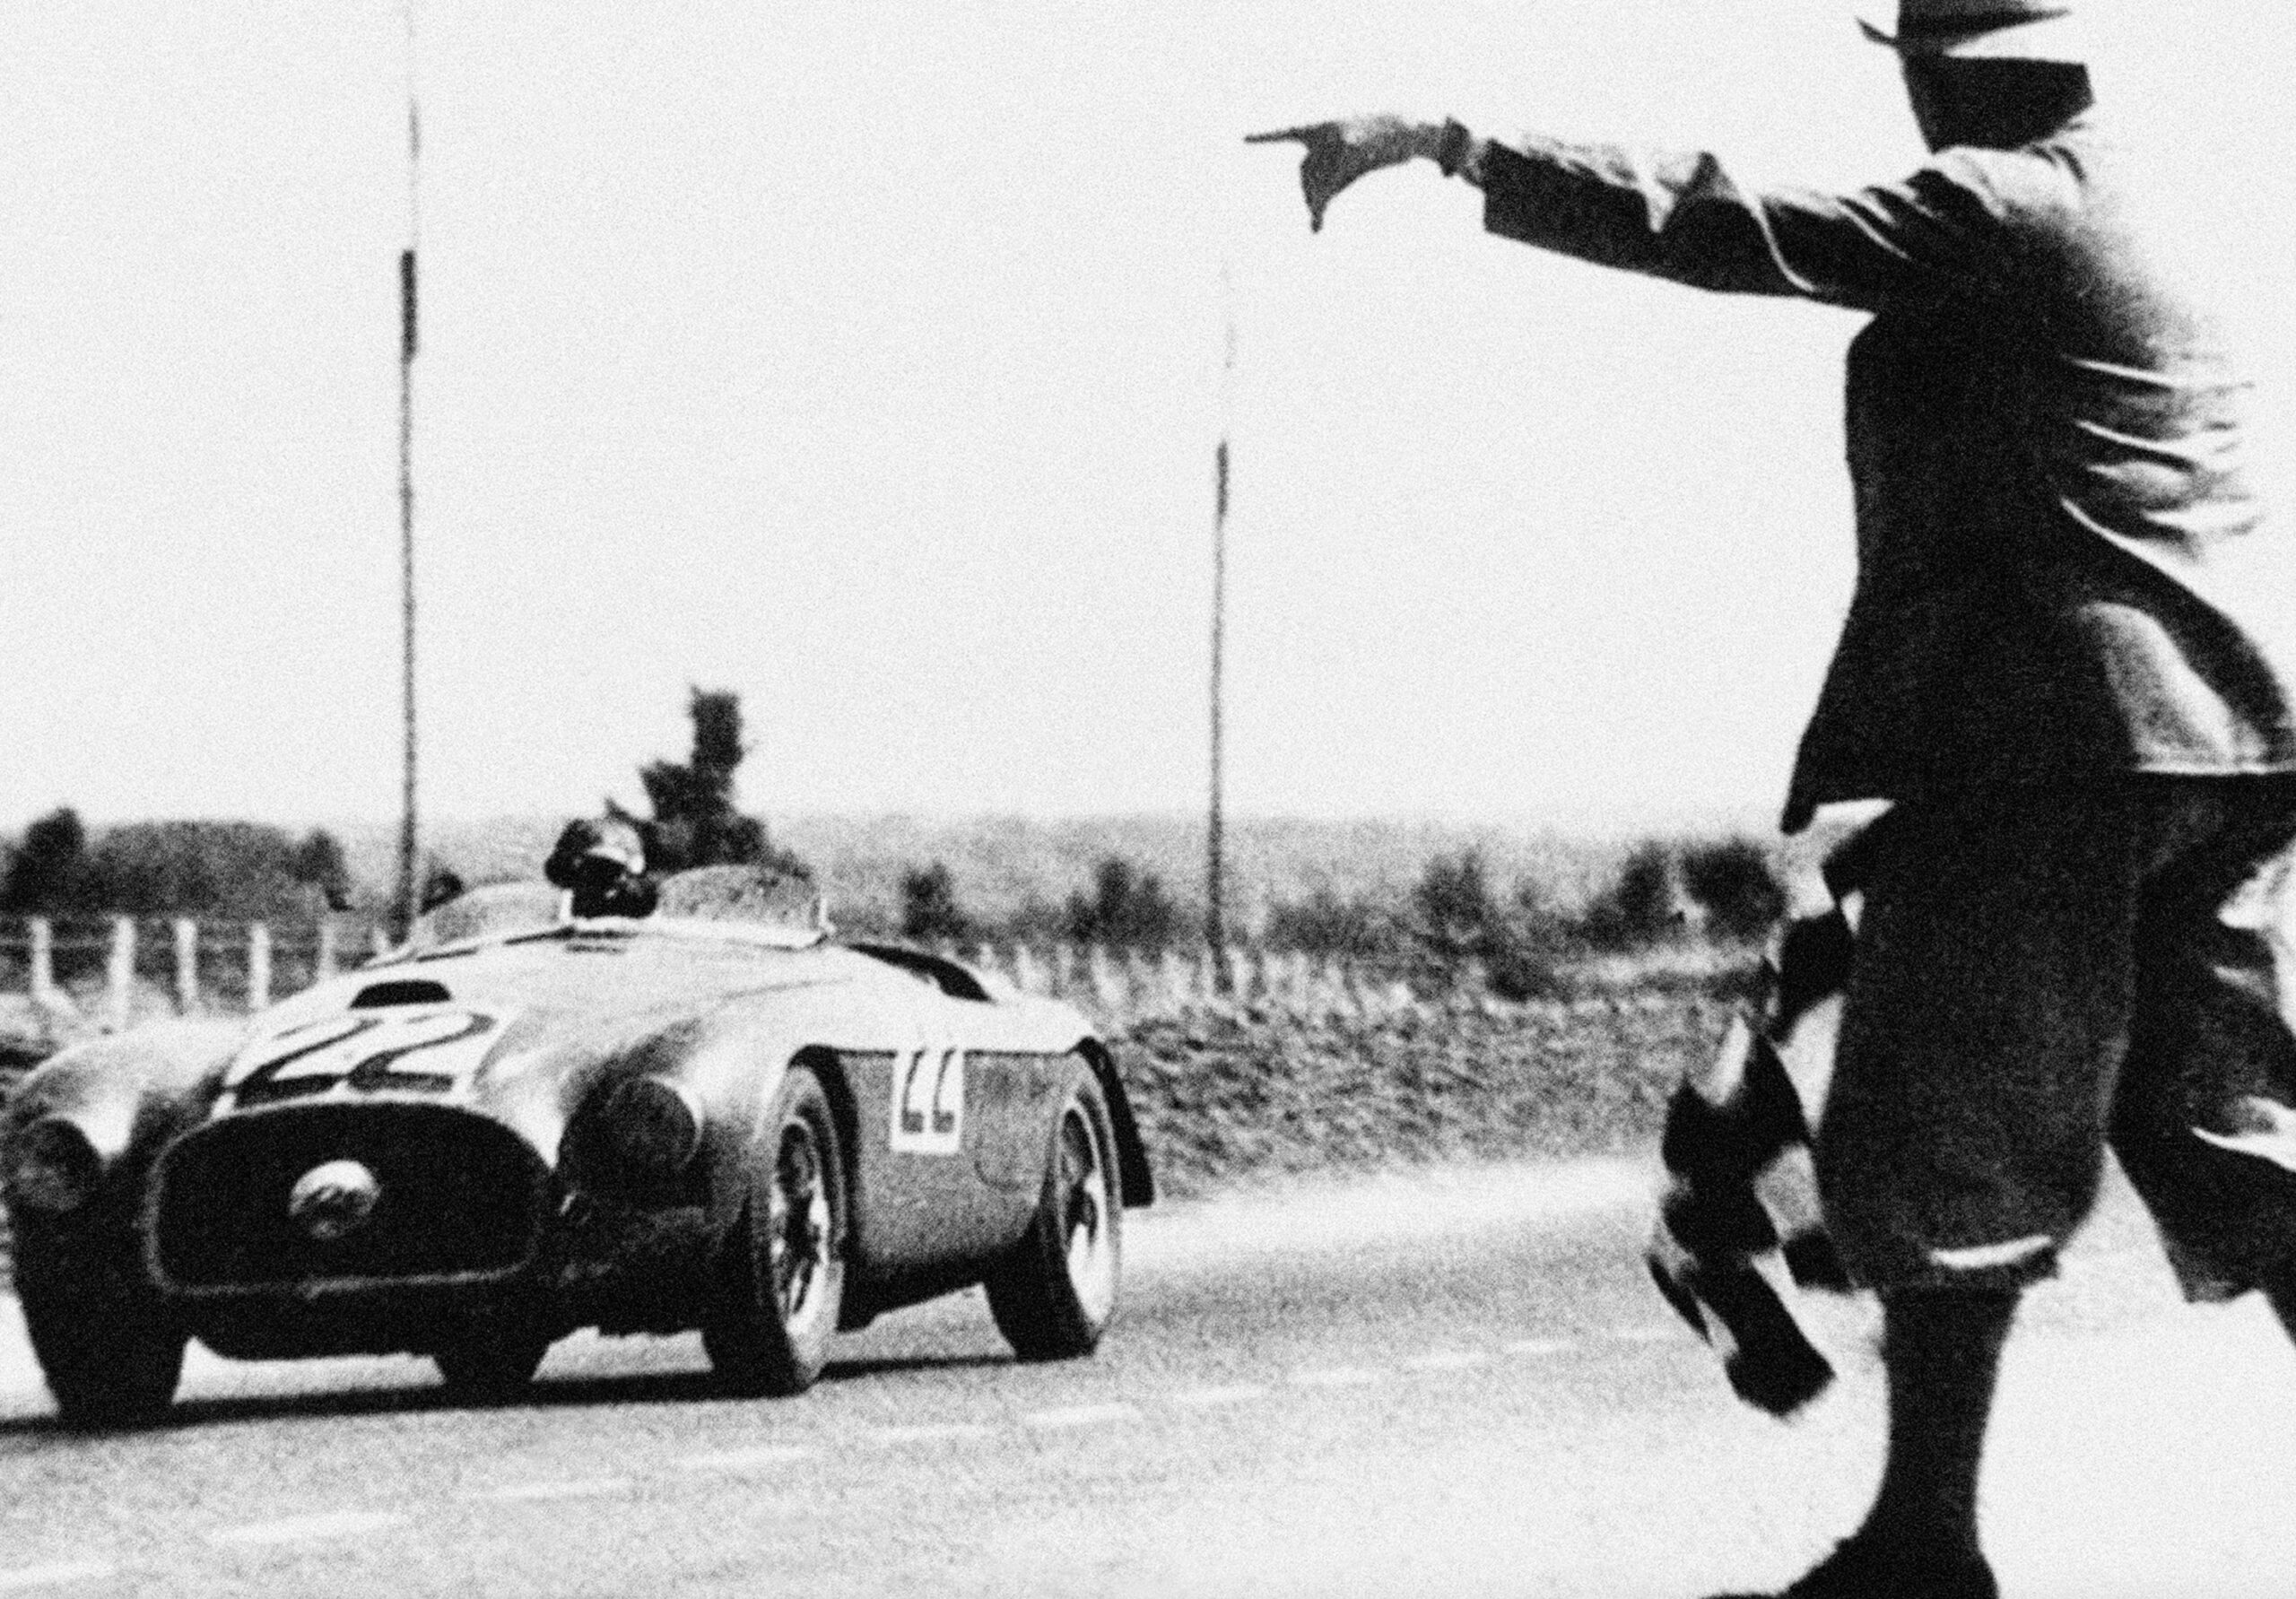 La Ferrari 166 MM vittoria a Le Mans nel 1949 (source: ferrari.com)